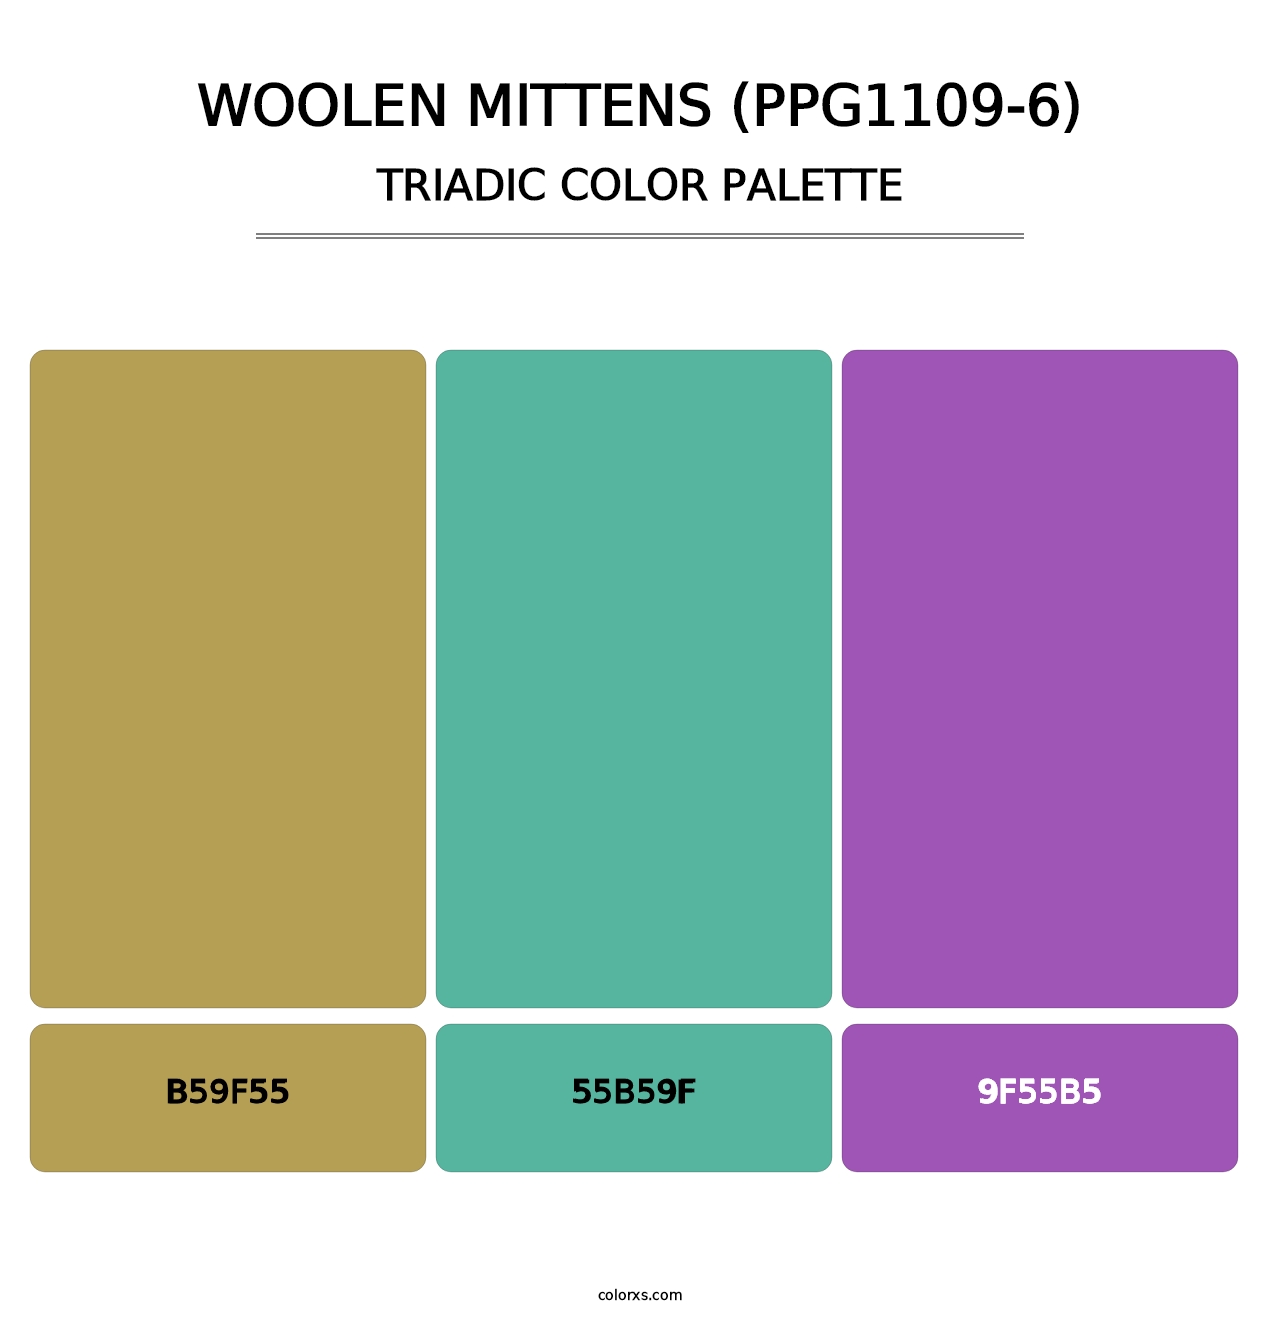 Woolen Mittens (PPG1109-6) - Triadic Color Palette